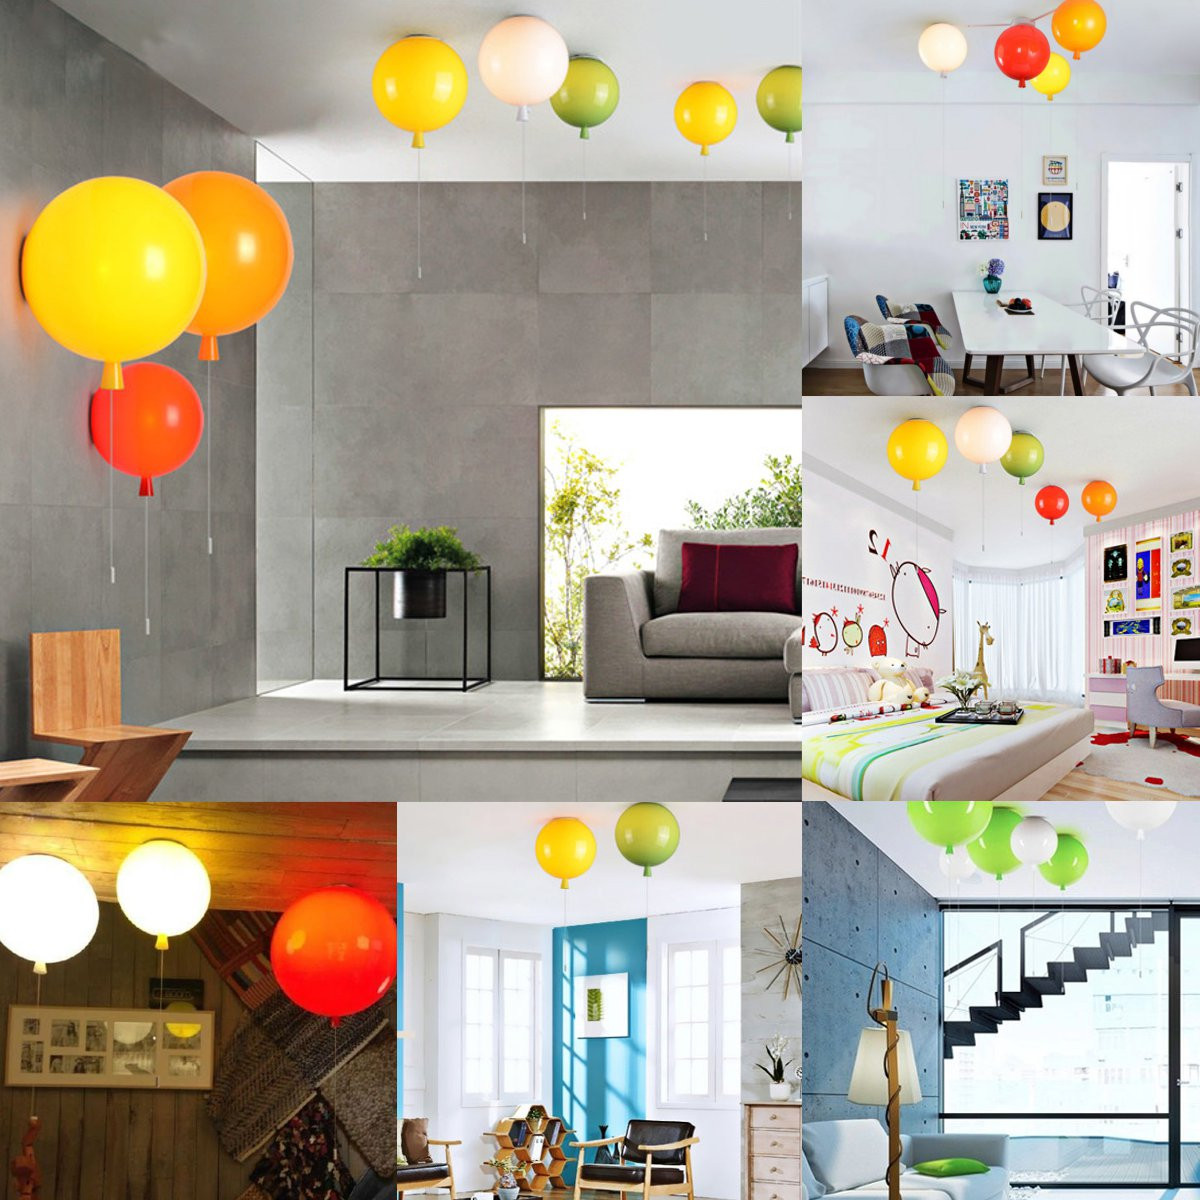 25cm-E27-Balloon-Chandelier-Ceiling-Pendant-Light-Modern-Wall-Lamp-Fixture-Party-Decor-Gift-1116760